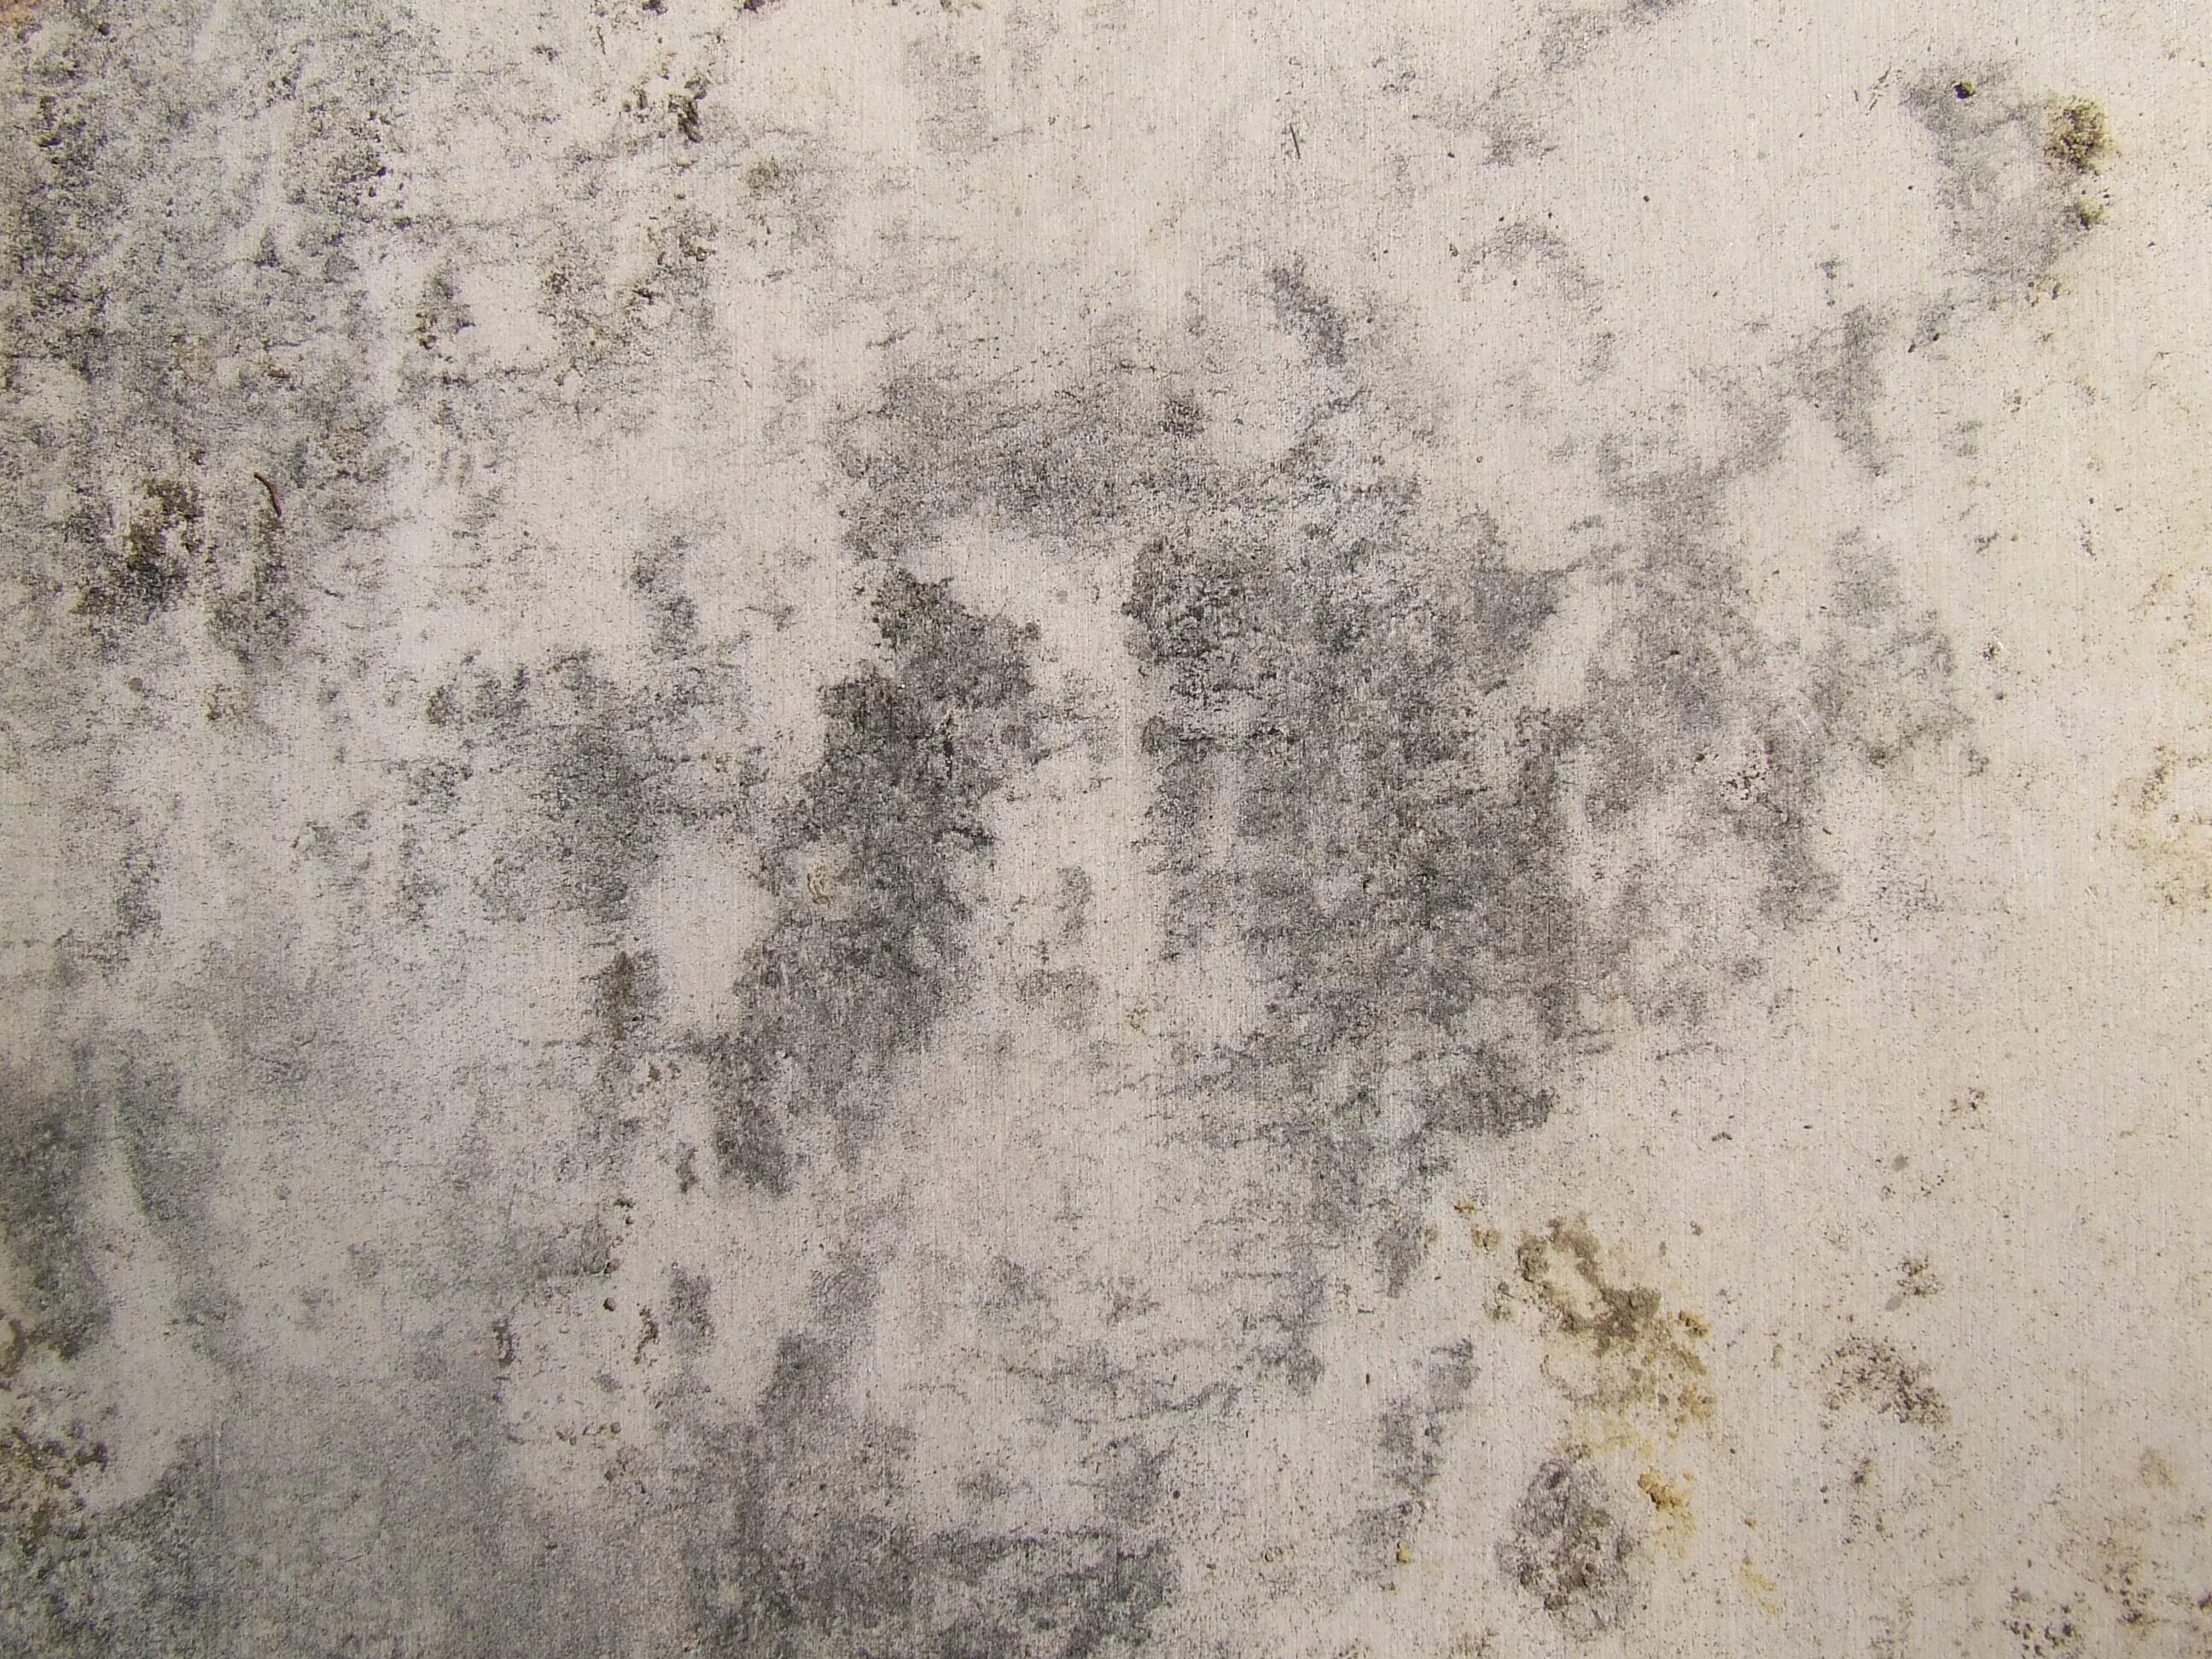 Текстура грязи. Текстура бетона. Бетонная стена. Dirt texture штукатурка. Dirty worn